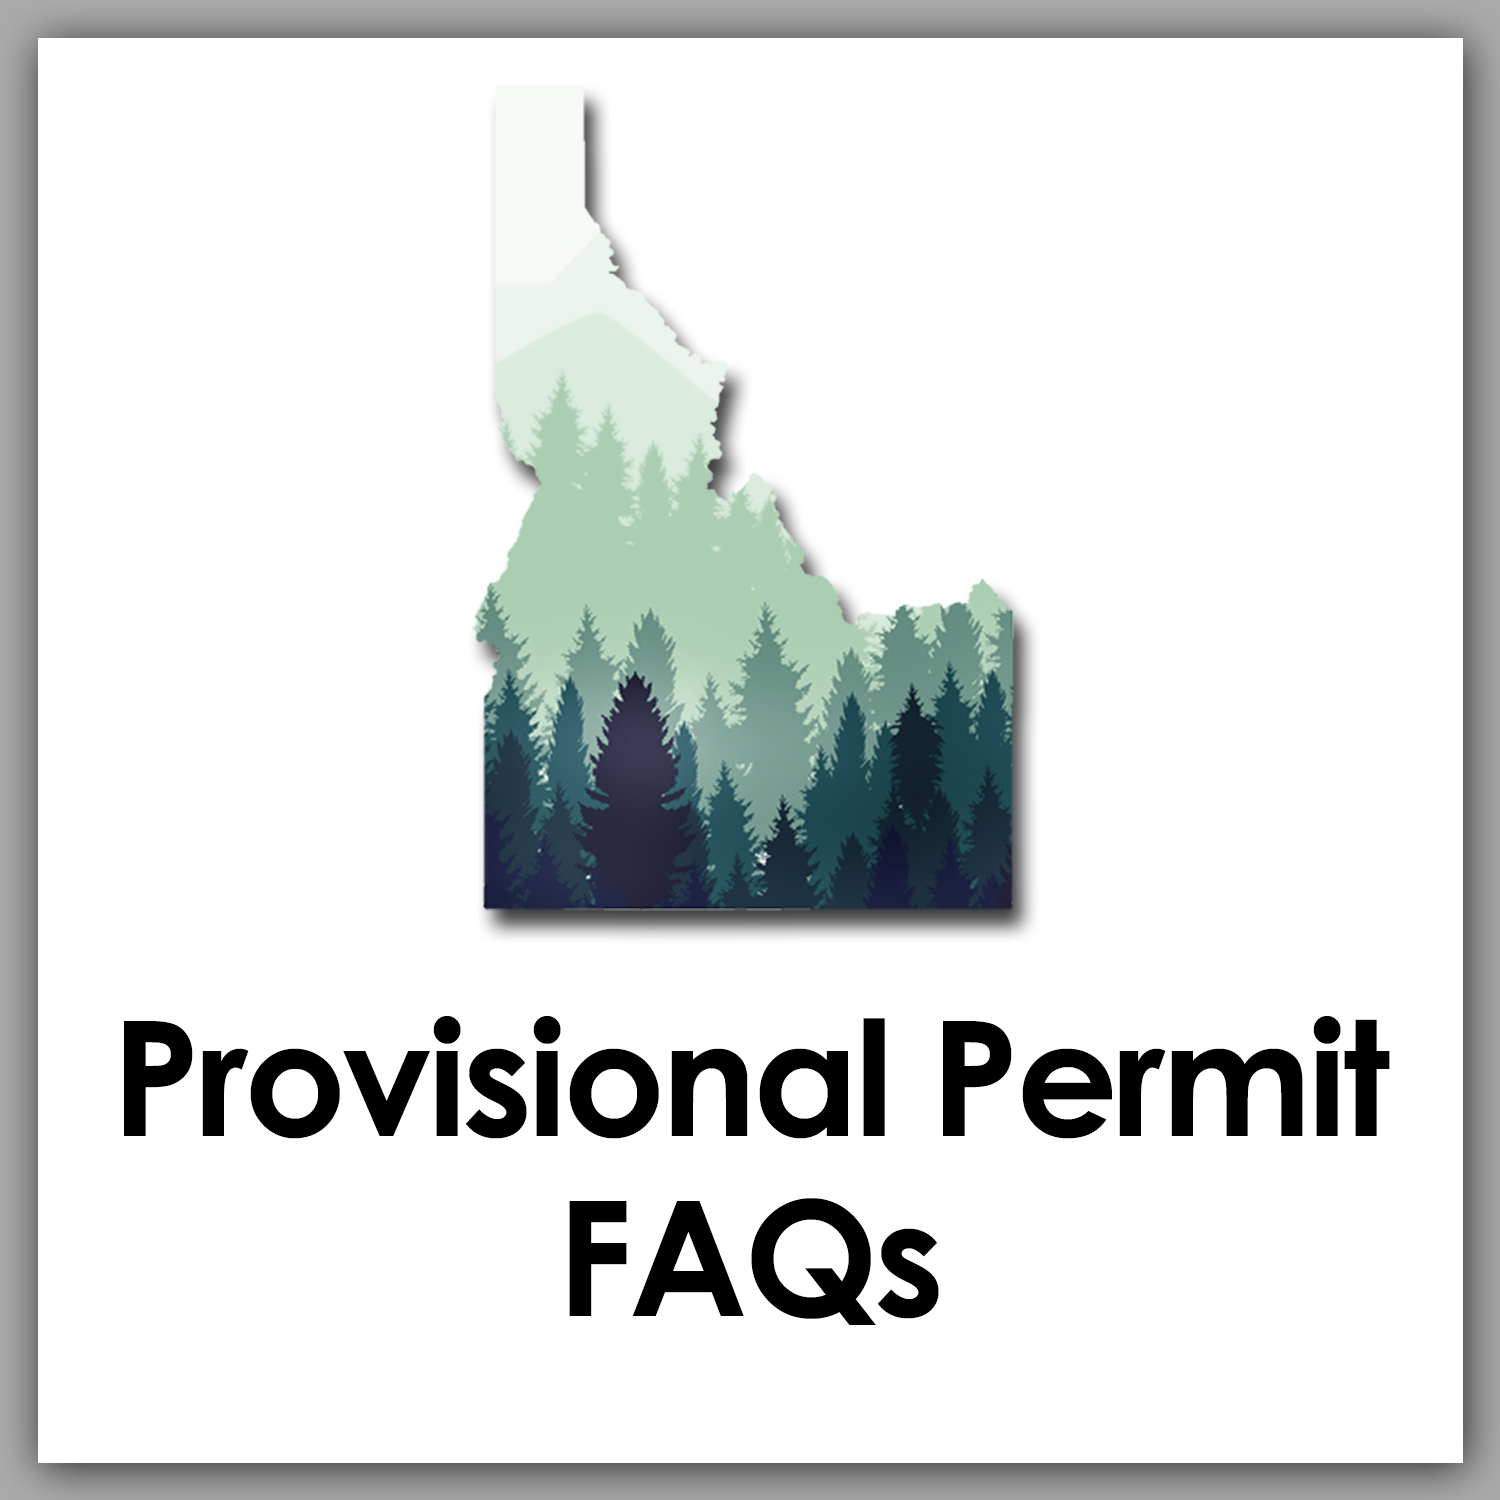 Provisional Permit FAQs